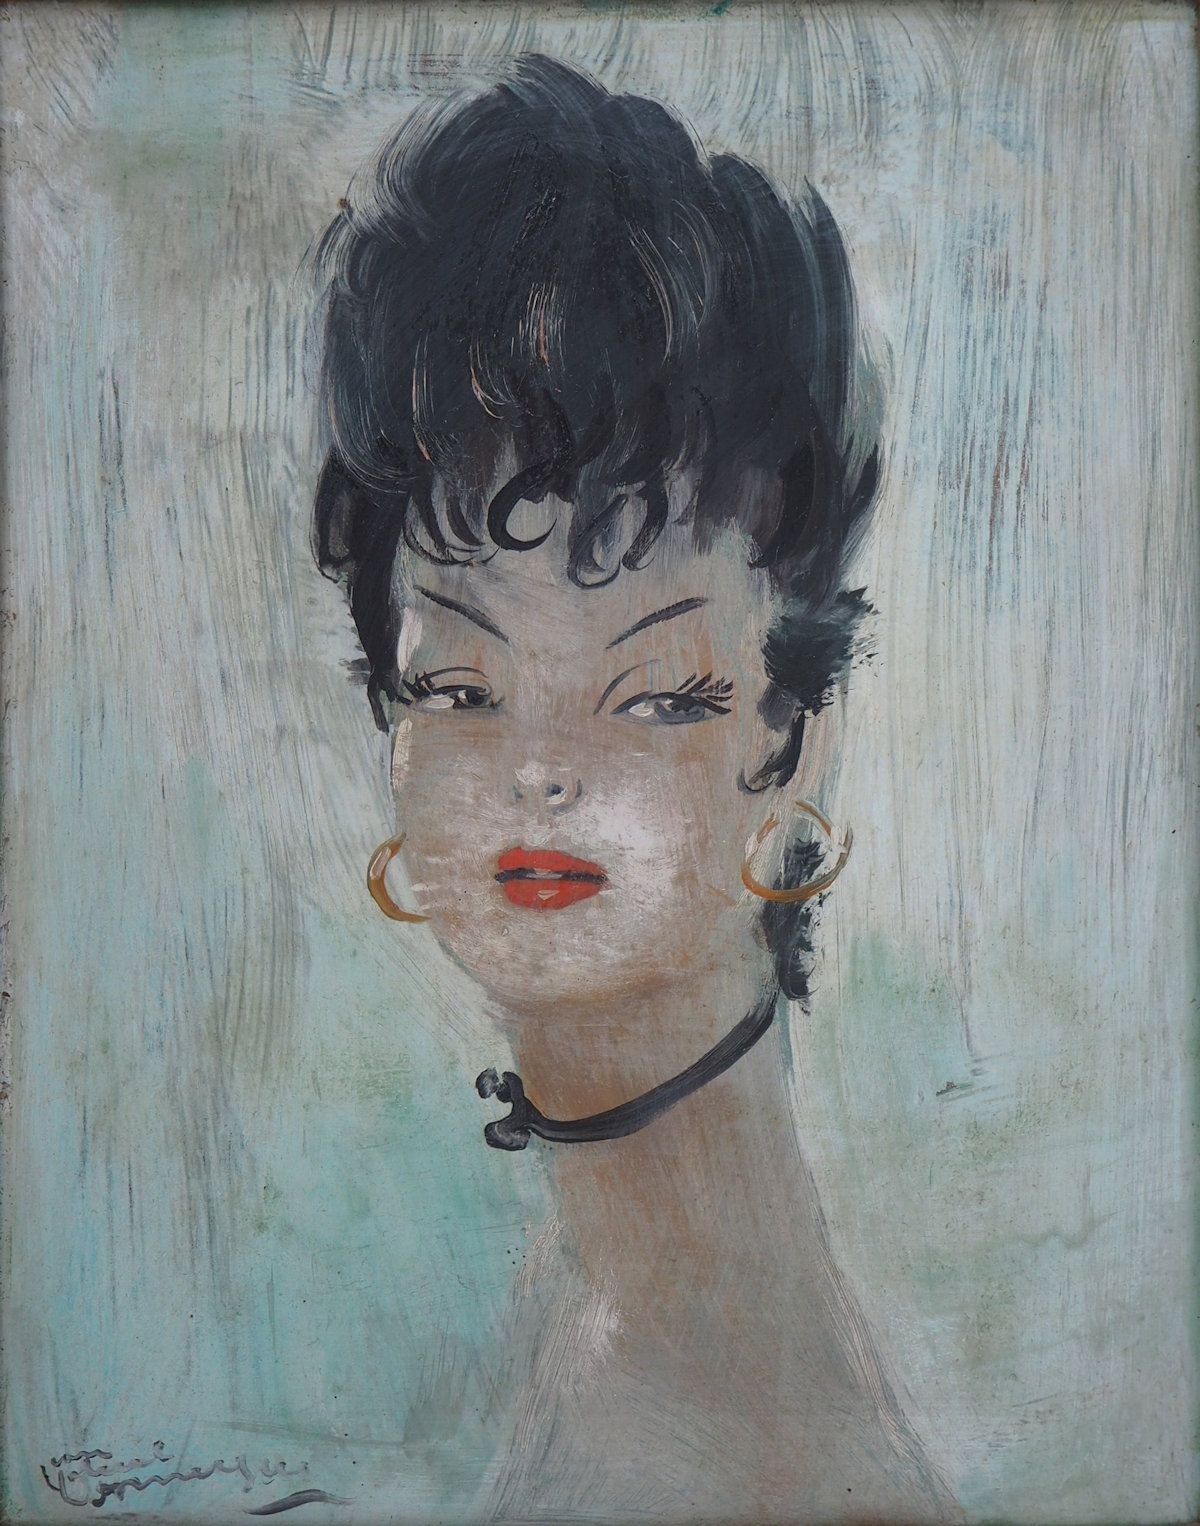 Jean-Gabriel DOMERGUE 让-加布里埃尔-多默古(1889-1962)

带着丝带的年轻女子

伊索尔面板上的油彩

左下方有签名

视线 2&hellip;